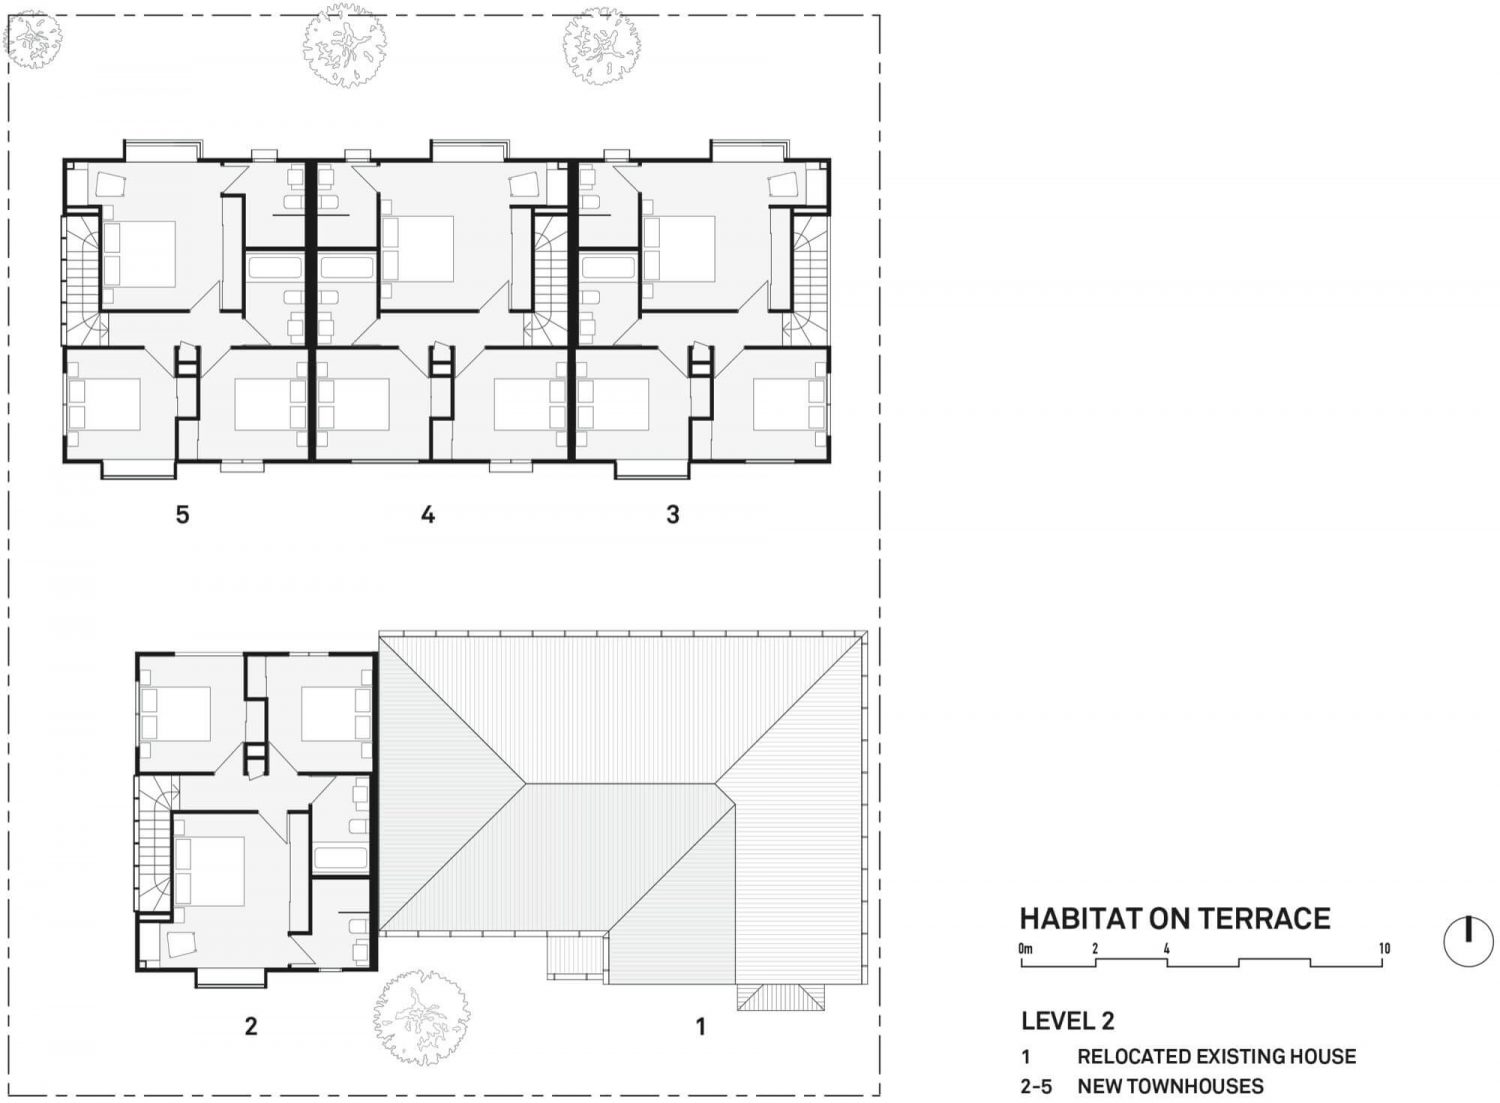 Habitat on Terrace [H.O.T.] by refresh*design